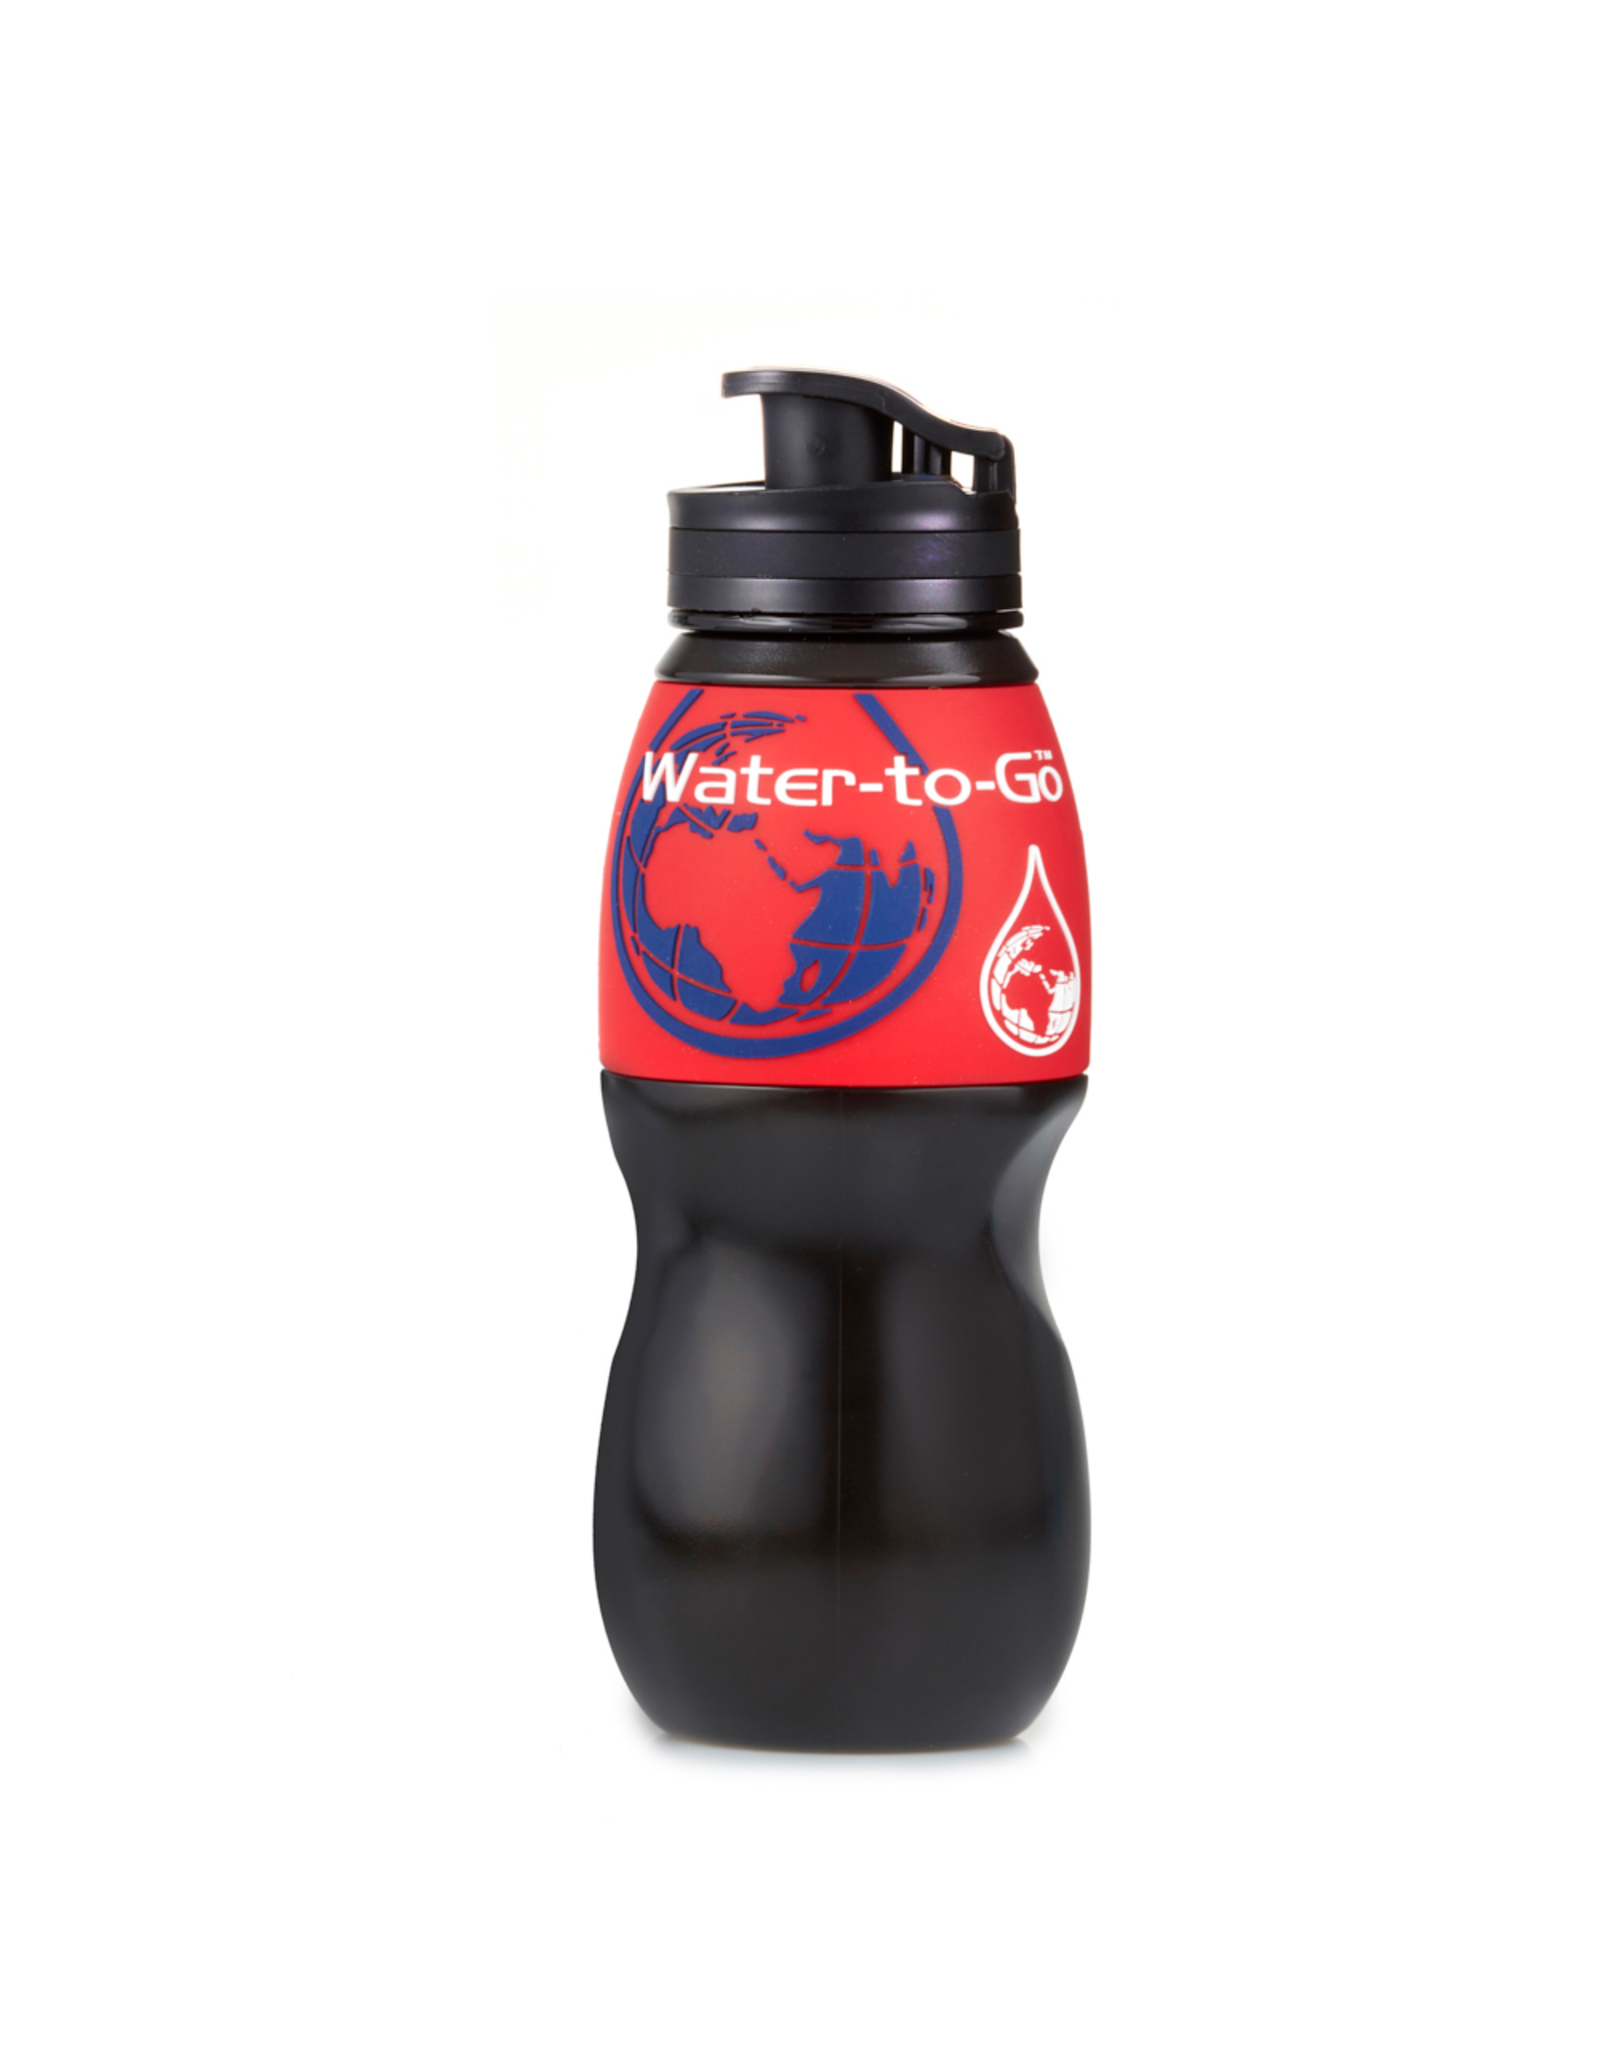 Nvt WatertoGo Drinkfles Waterfles met Filter - 75cl – Rood – BPA Vrij